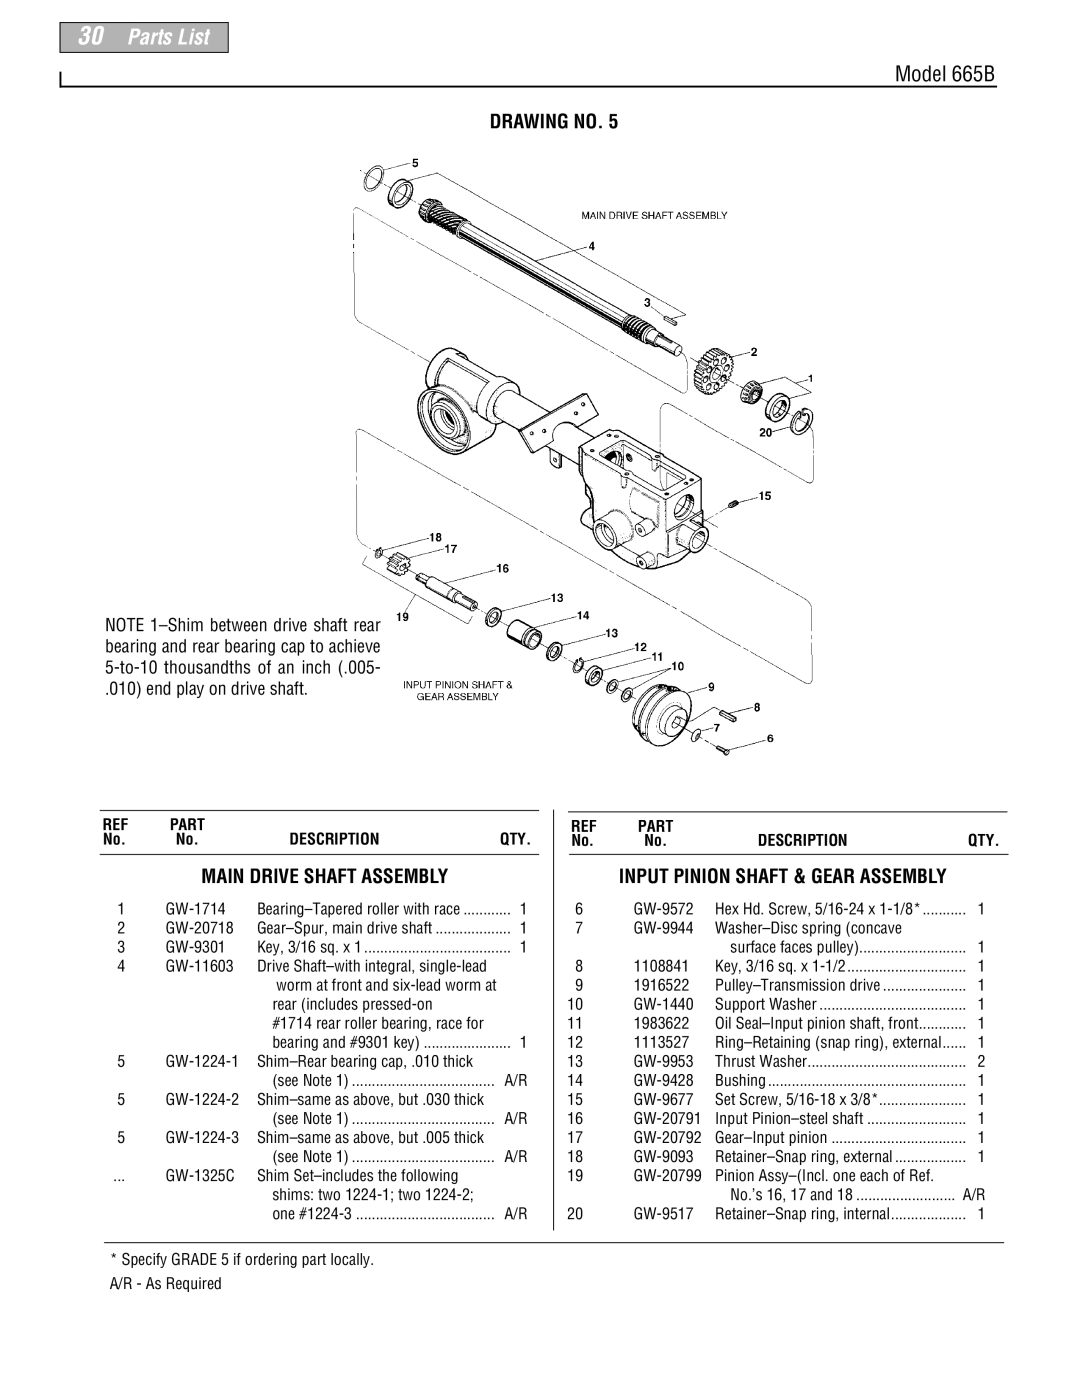 Troy-Bilt manual 30Parts List, Input Pinion Shaft & Gear Assembly, Main Drive Shaft Assembly, Model 665B, Drawing No 